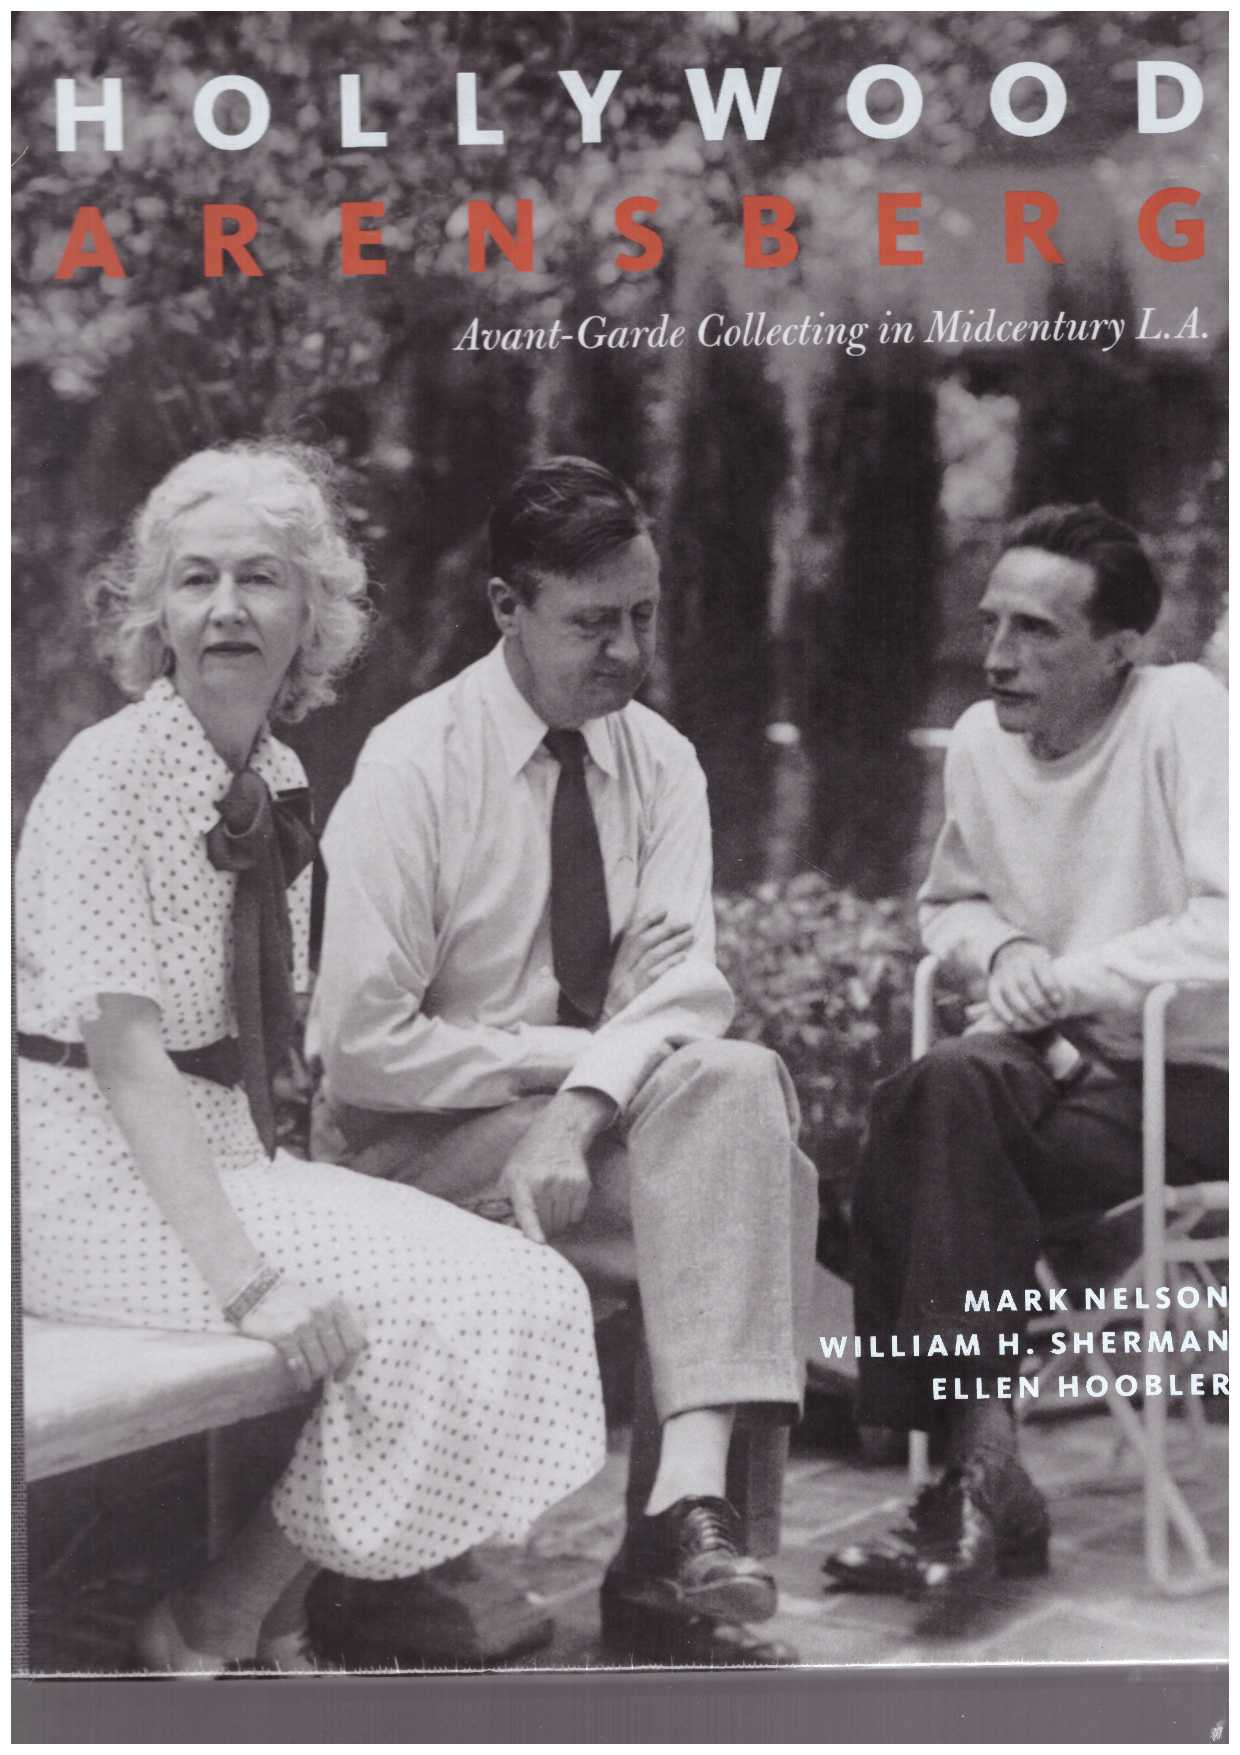 NELSON, Mark ; SHERMAN, William H. ; HOOBLER, Ellen - Hollywood Arensberg. Avant-Garde Collecting in Midcentury L.A.